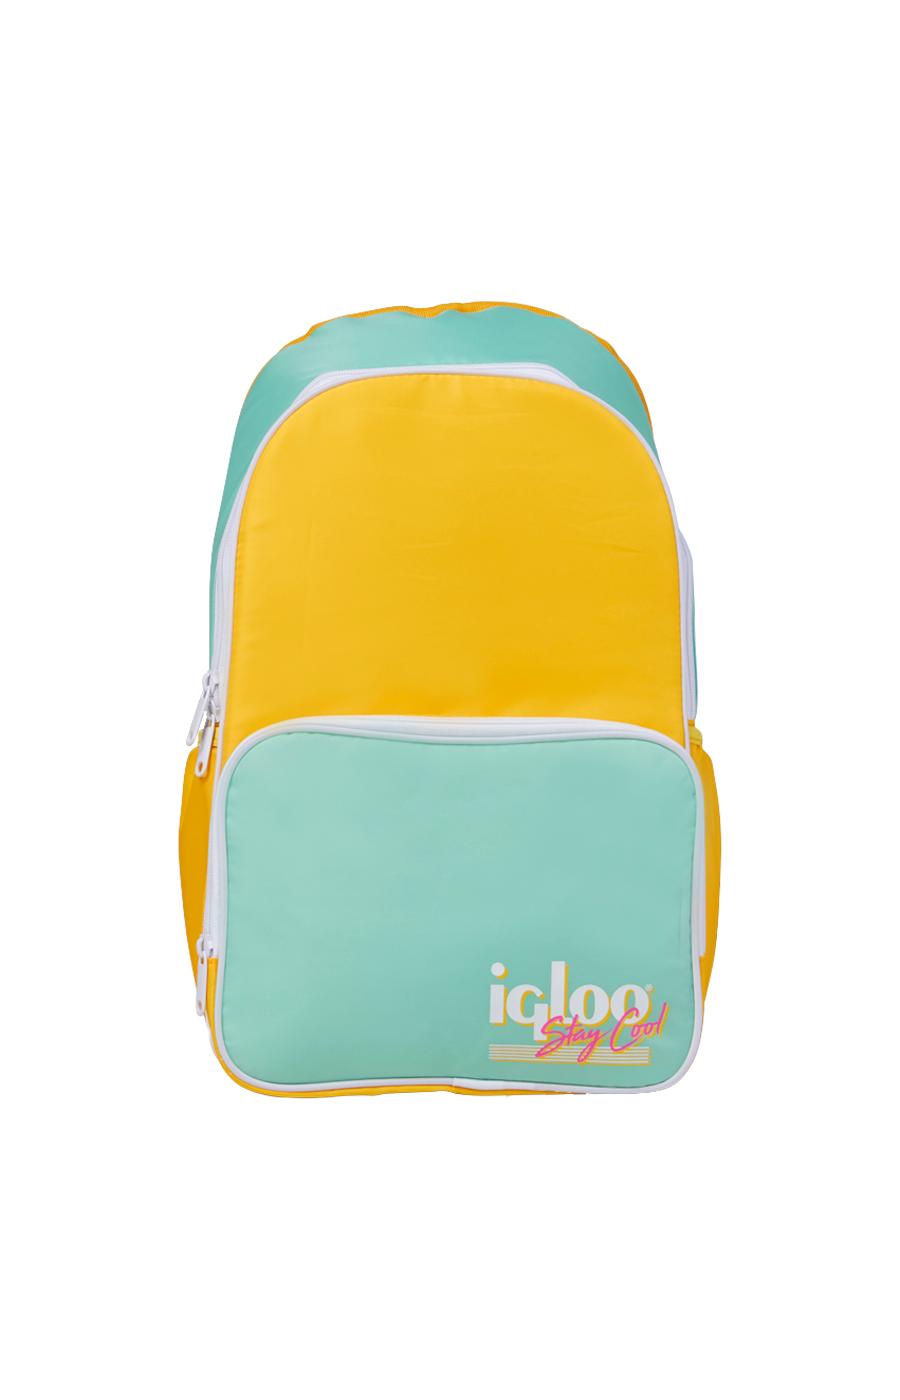 Igloo Retro Backpack Cooler - Yellow/Mint; image 1 of 3